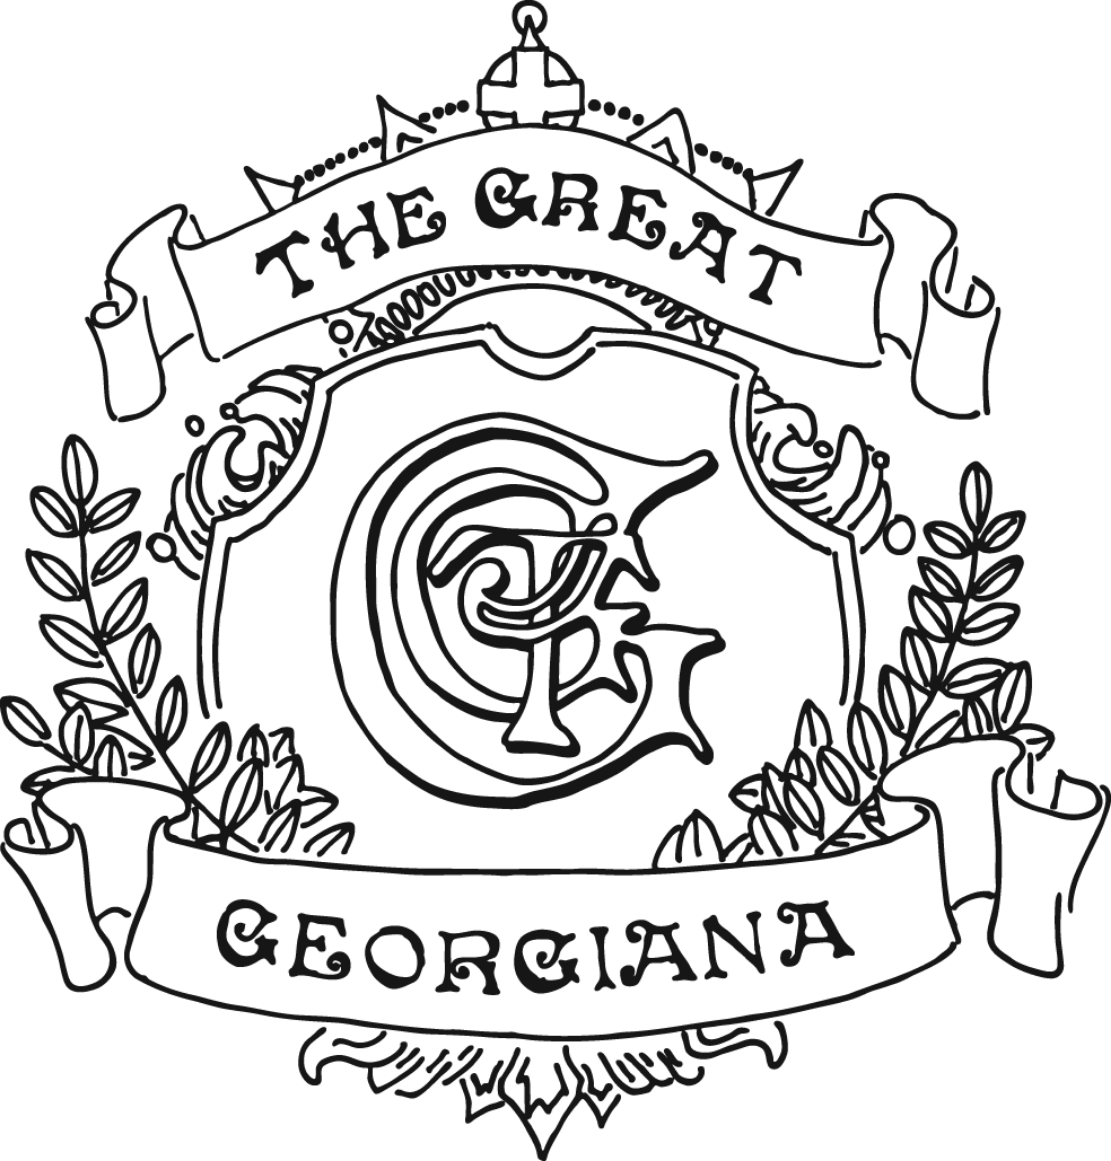 The Great Georgiana